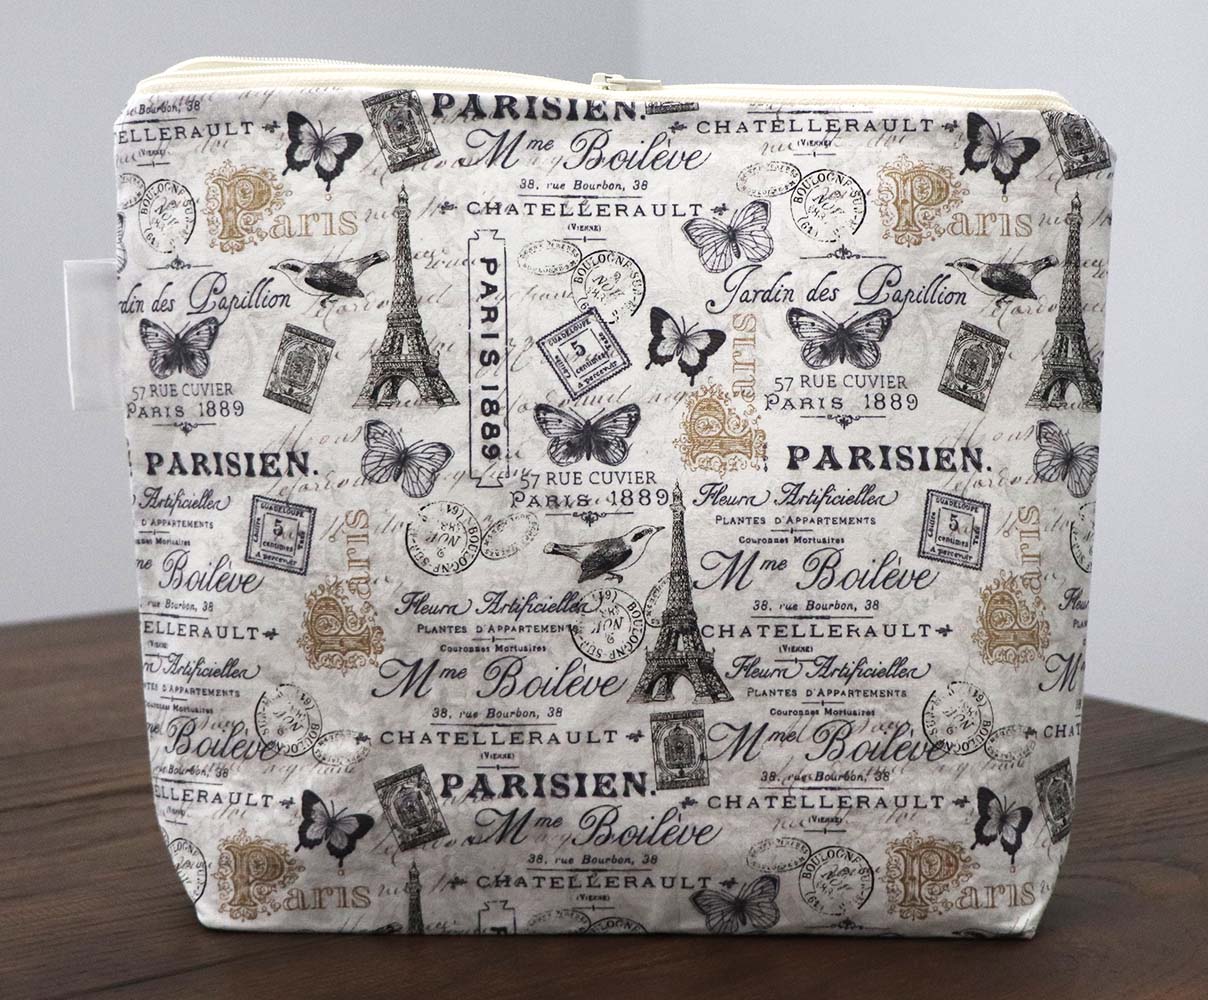 PARIS - Handmade zipper bag